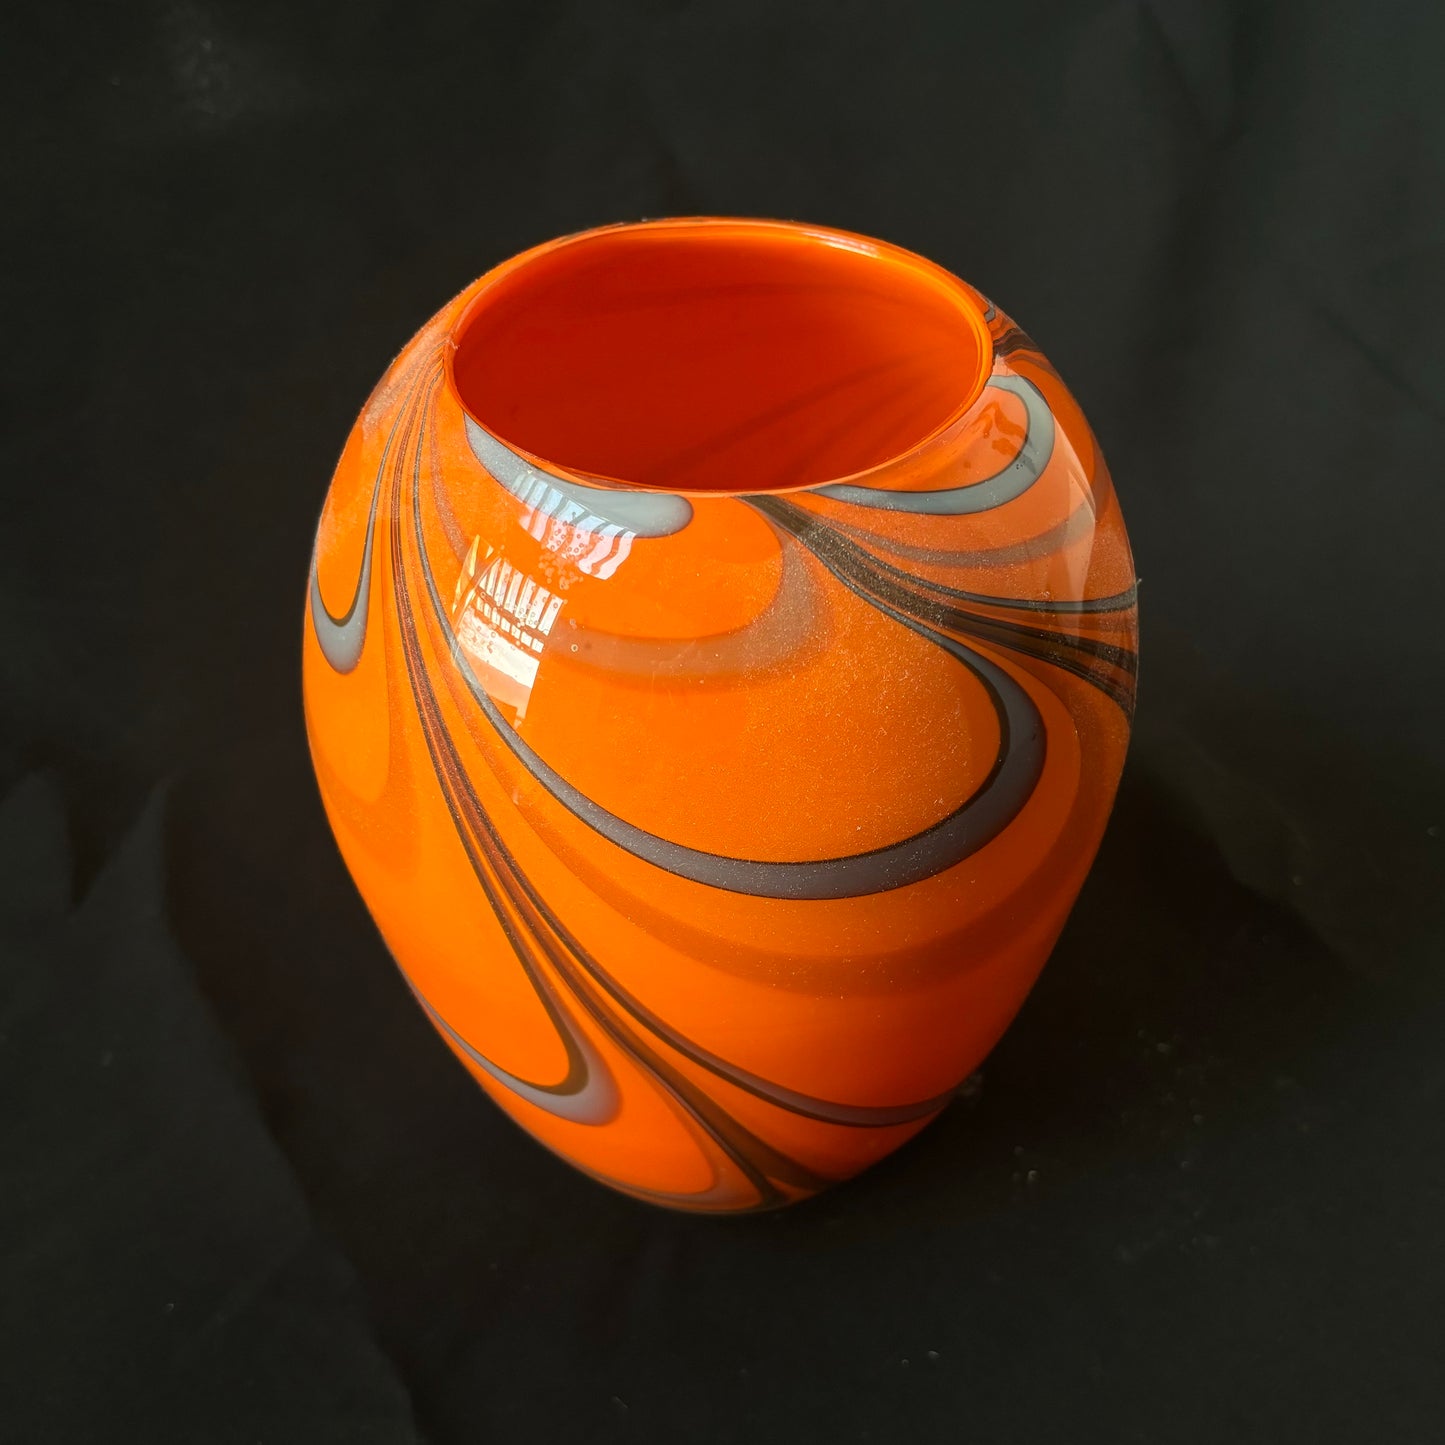 Orange Swirl Vase